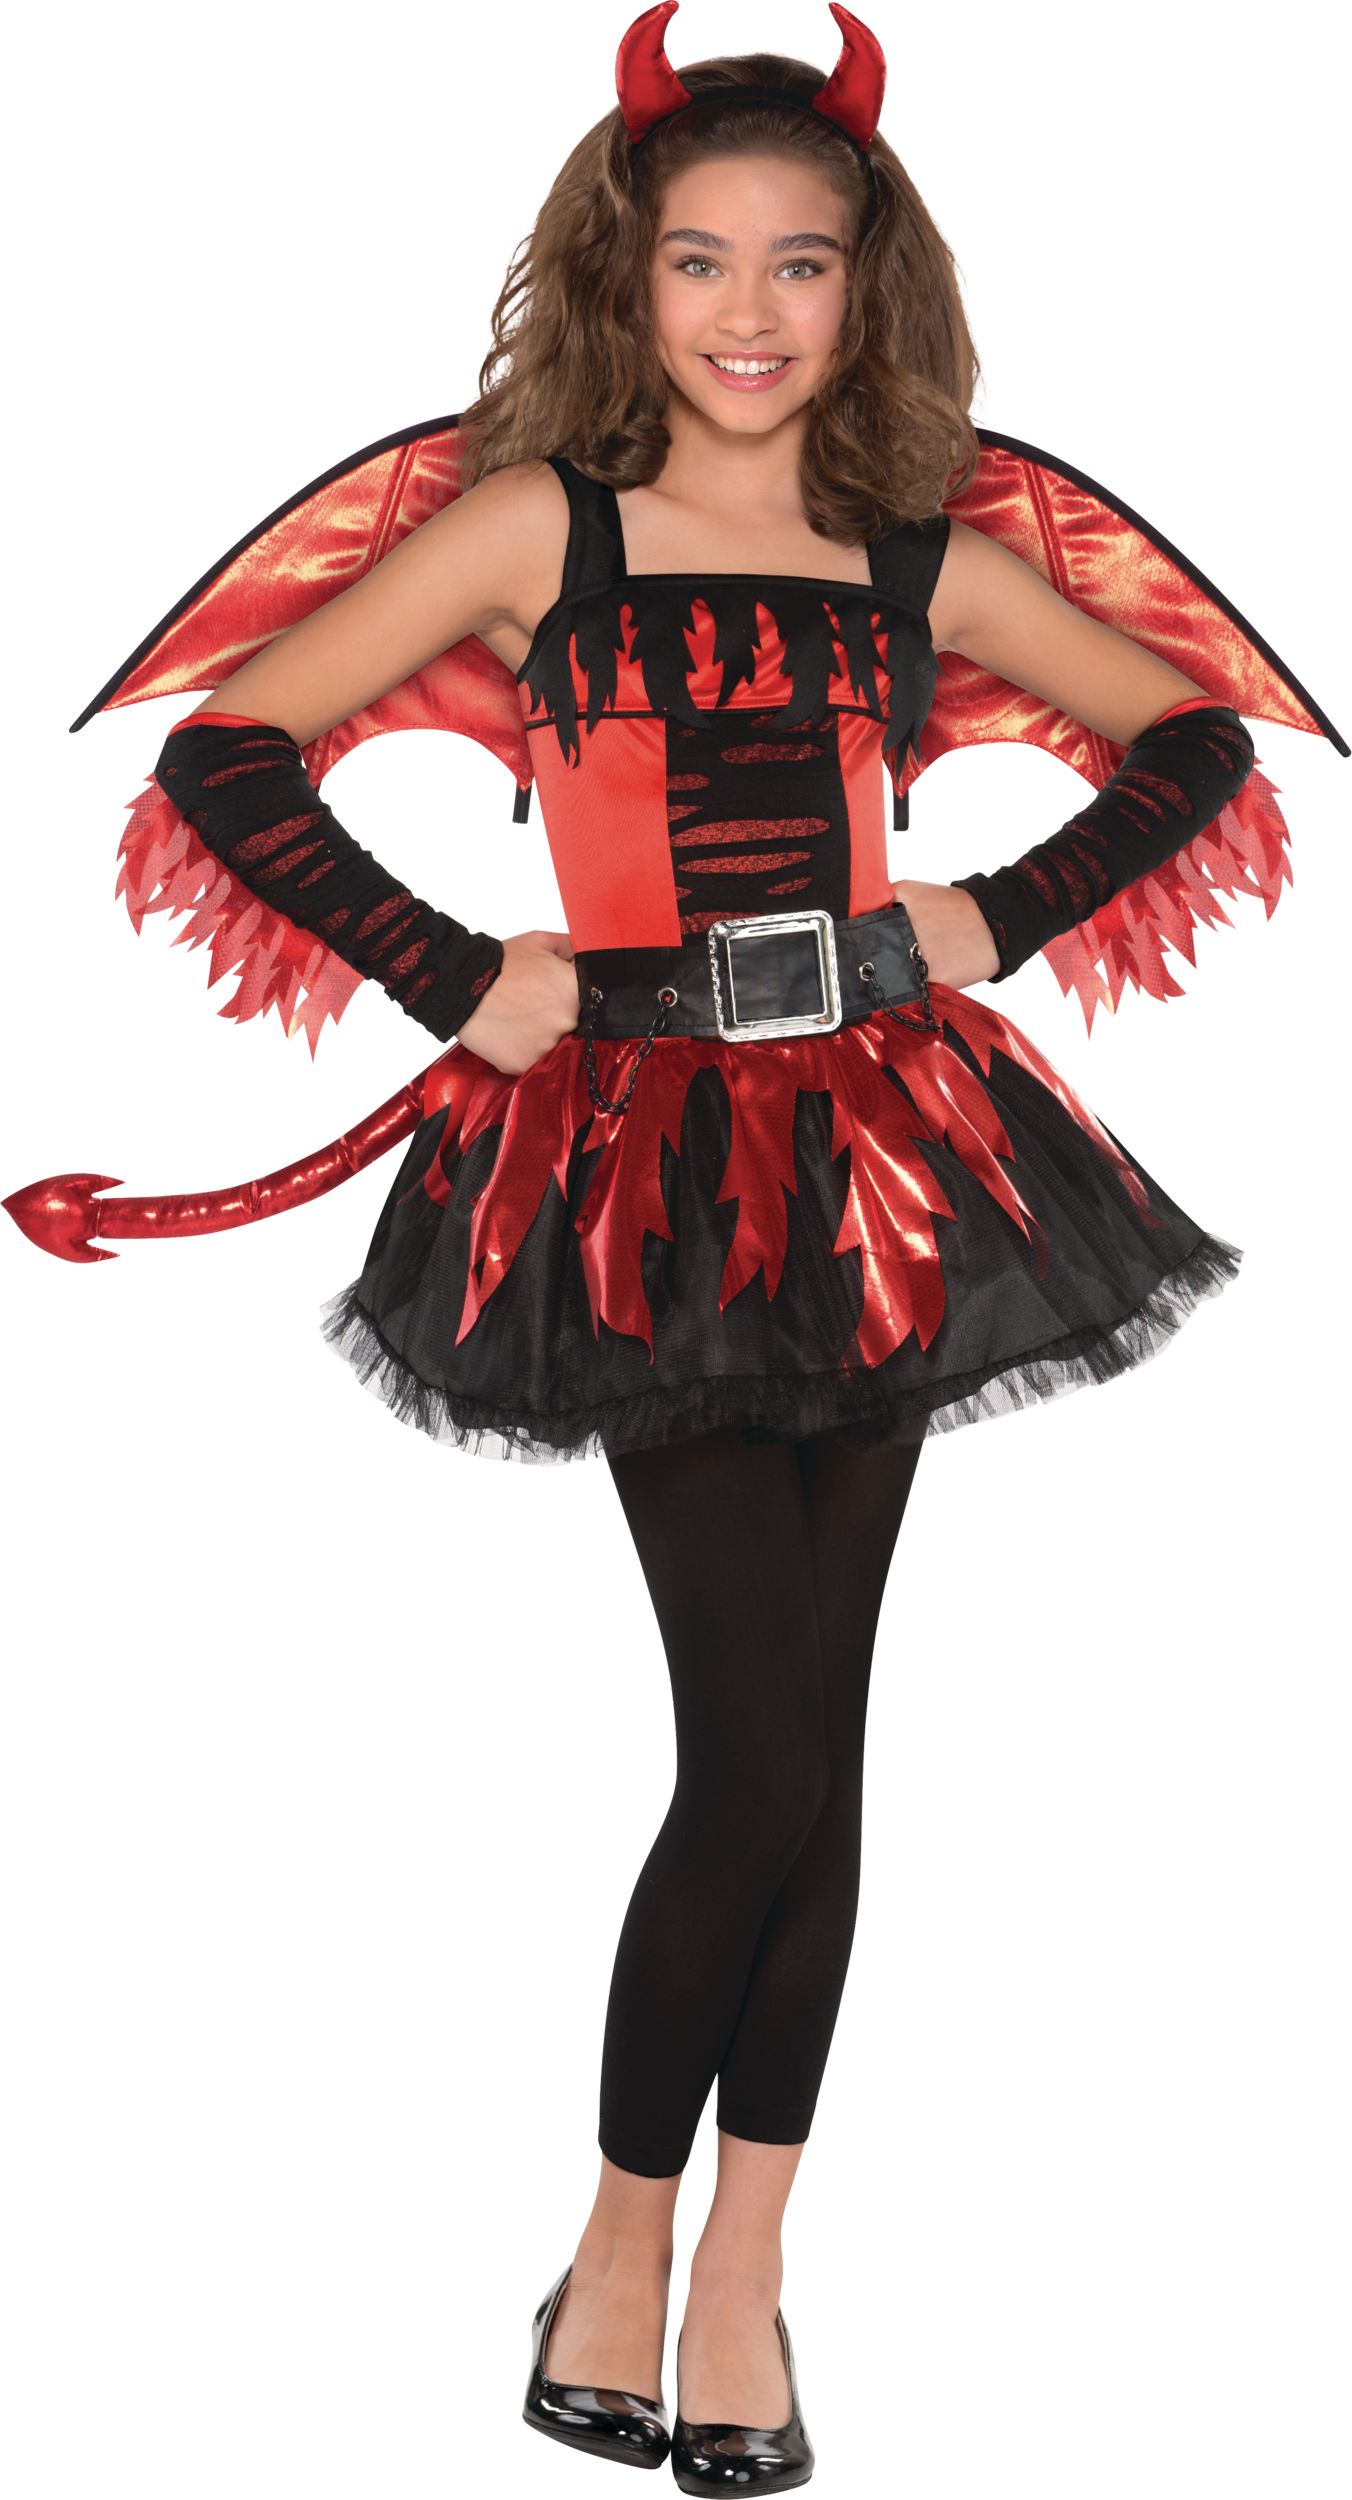 Kids Girls Black Footless Tights Size M Halloween Costume Black